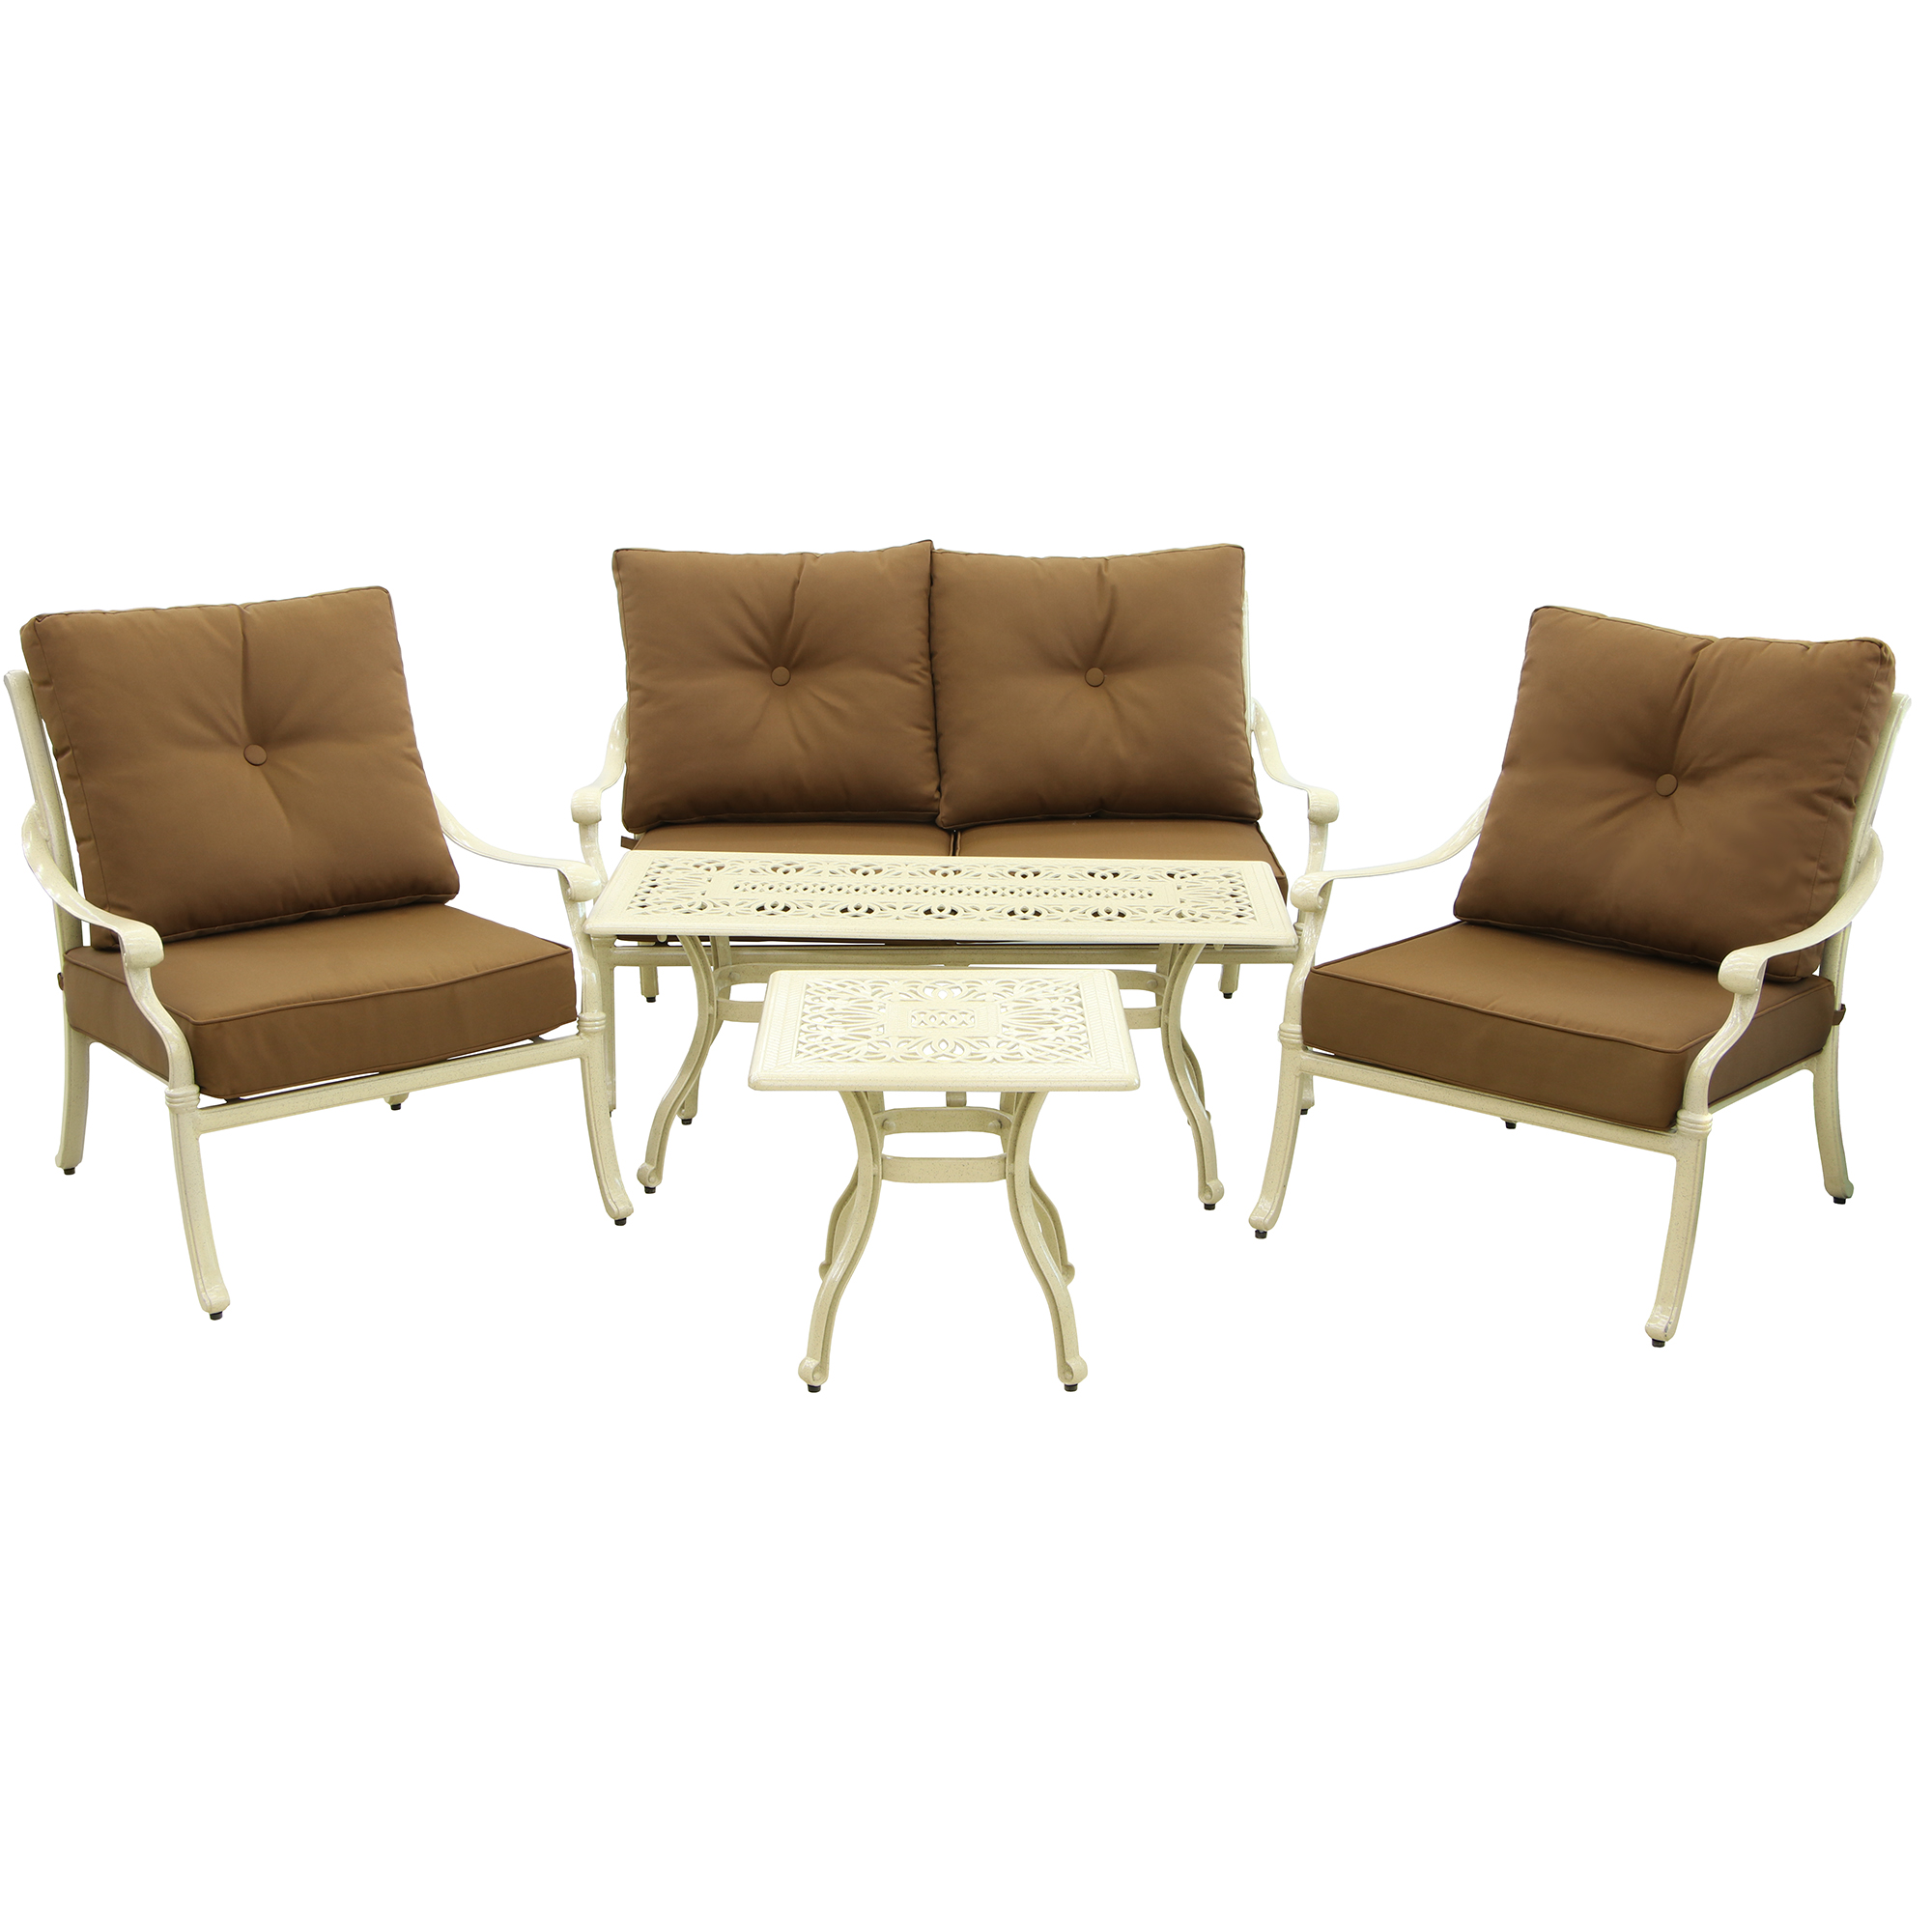 Комплект мебели Linyi 5 предметов бежево-коричневый